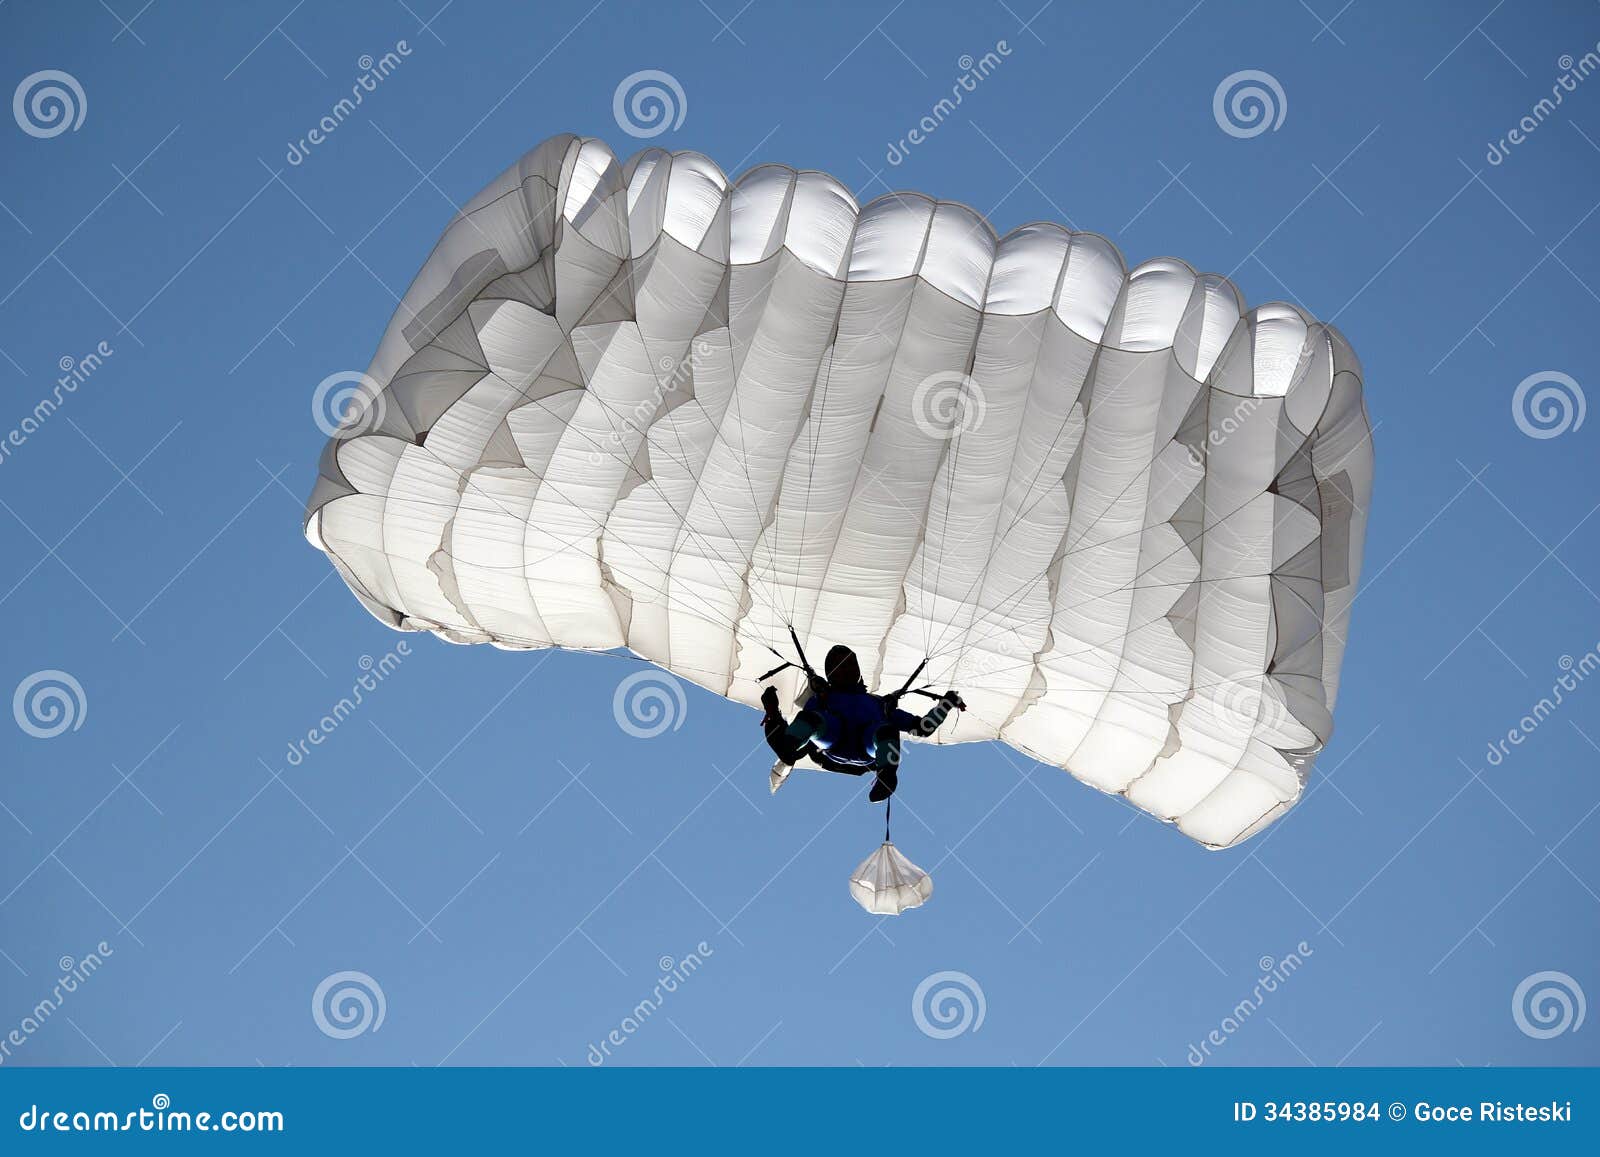 parachutist on blue sky